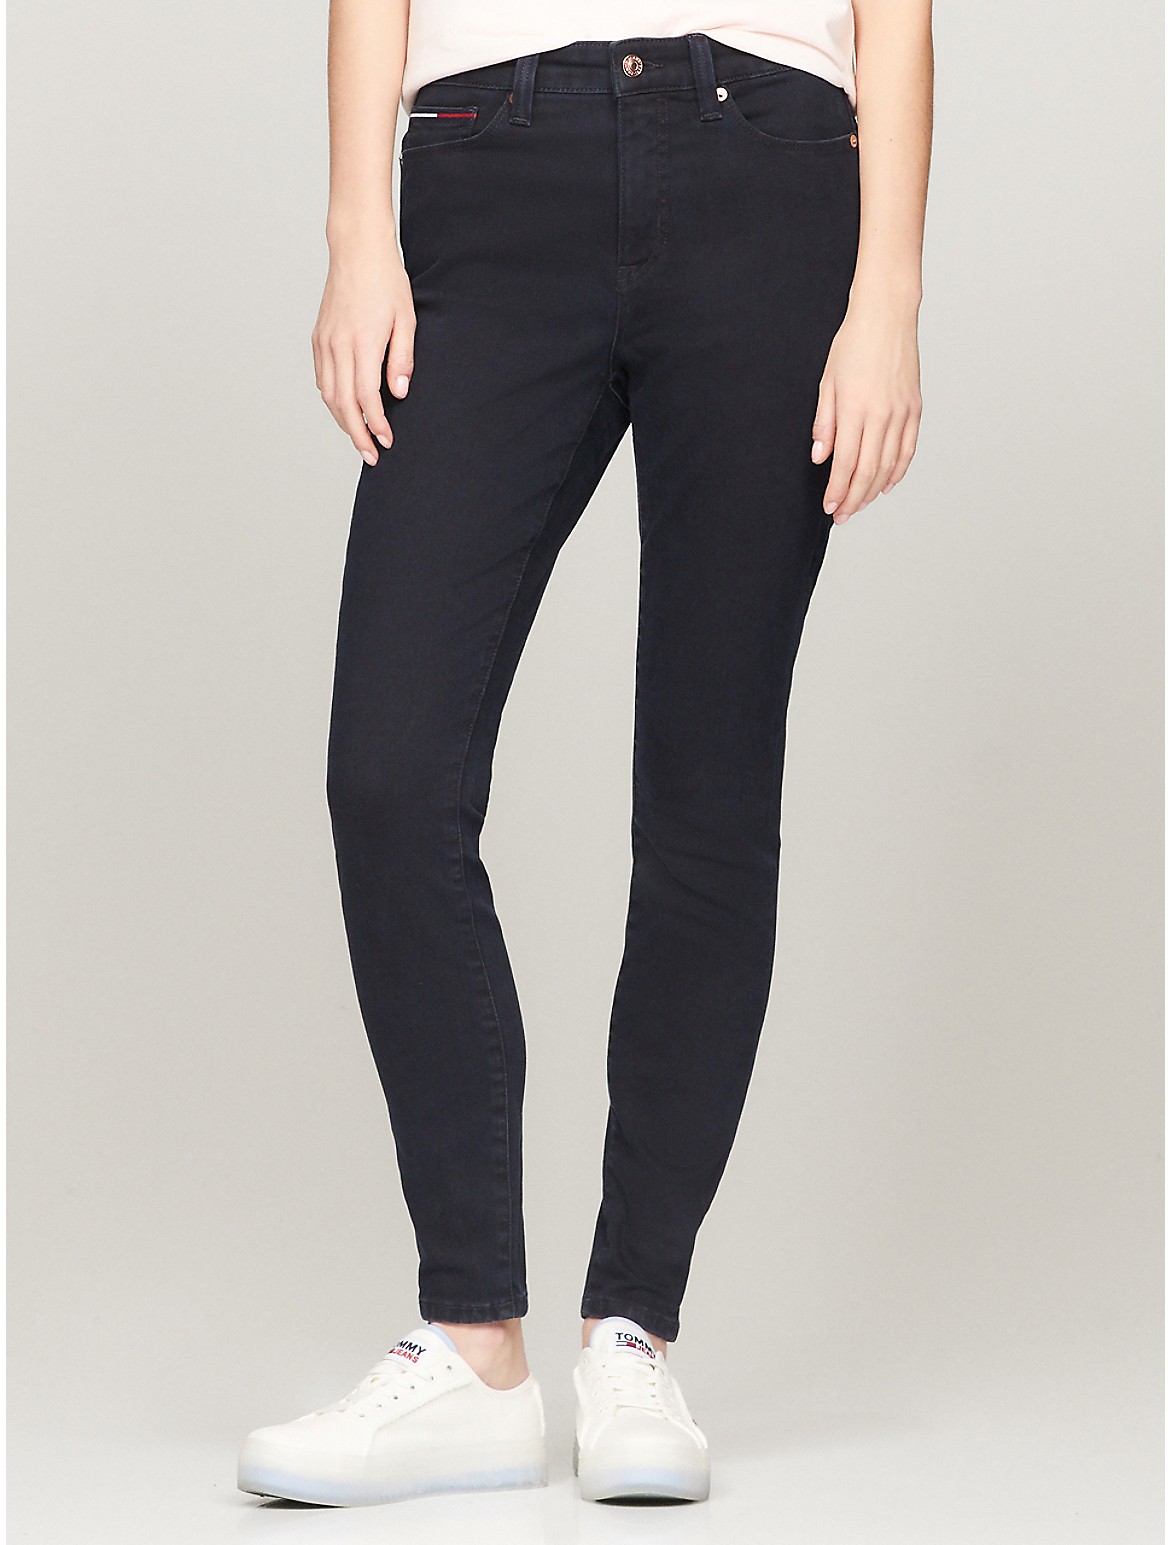 Tommy Hilfiger Women's High-Rise Skinny Fit Dark Wash Jean